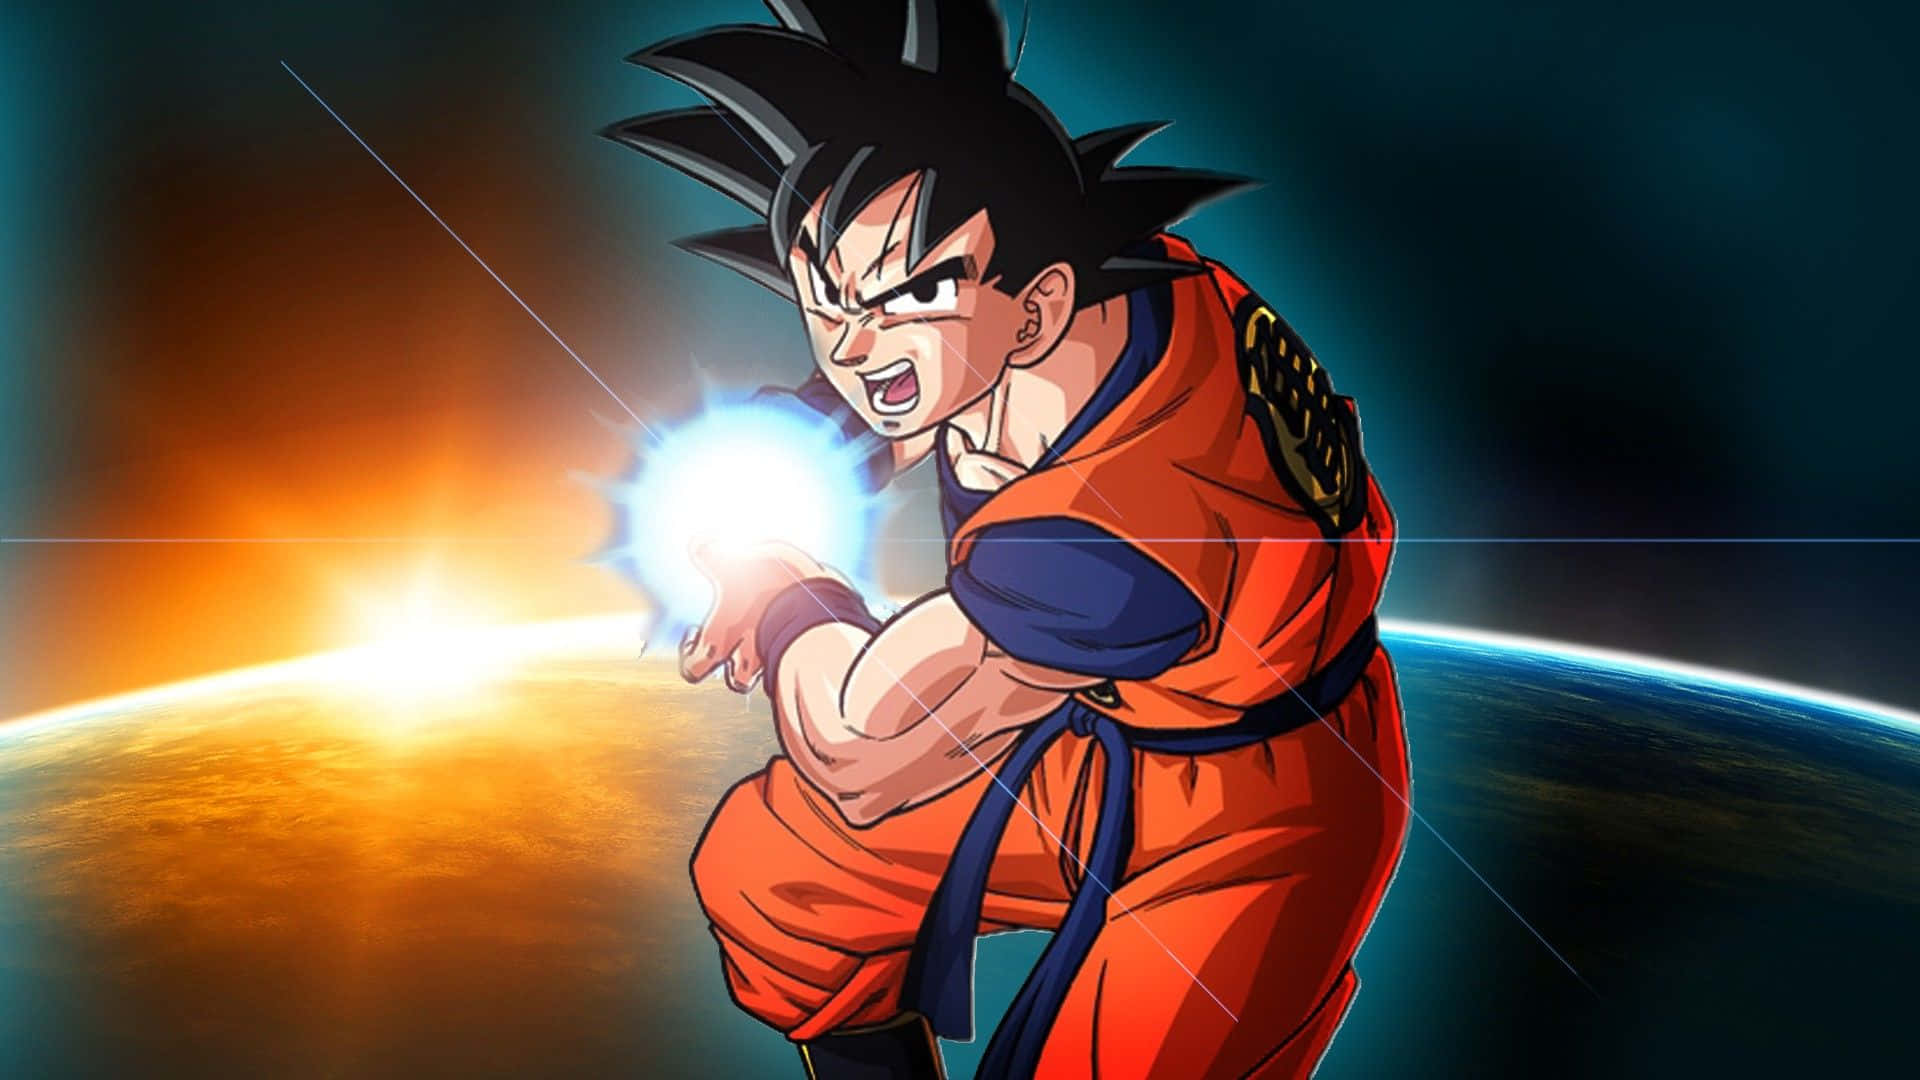 Goku battles with Universe 11's Jiren